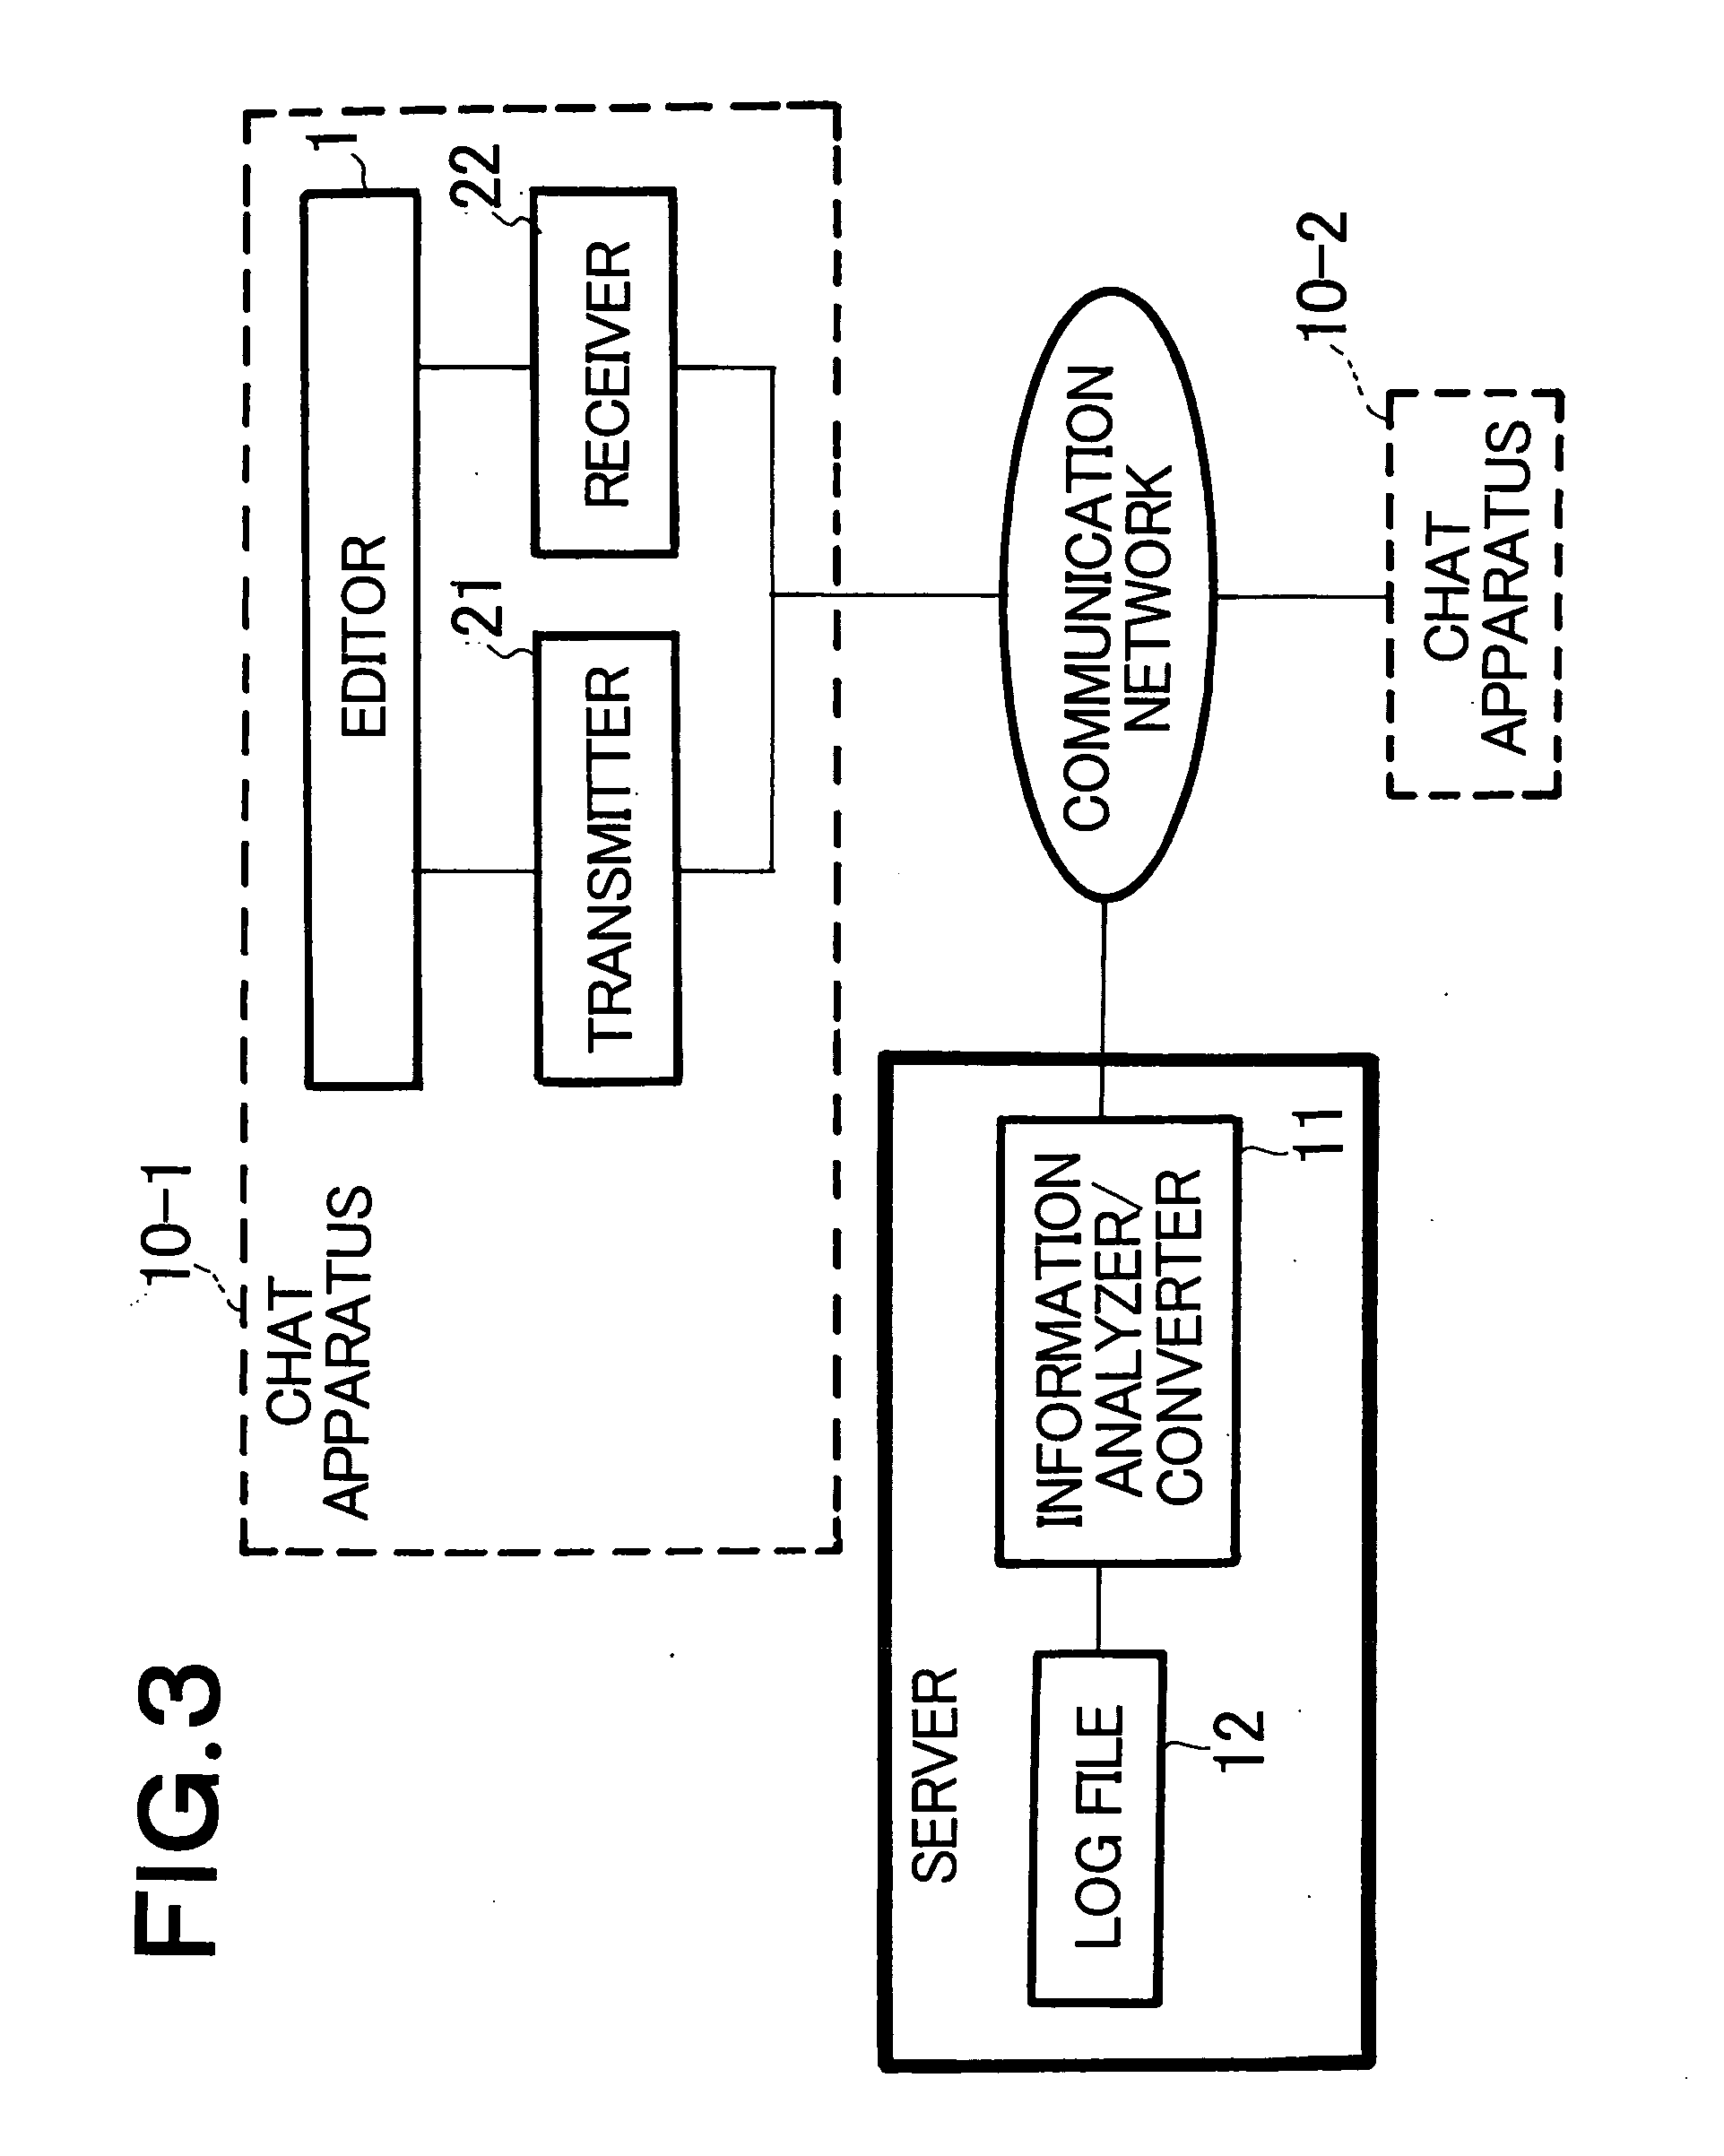 Chat apparatus transmitting/receiving information indicating switching of chat